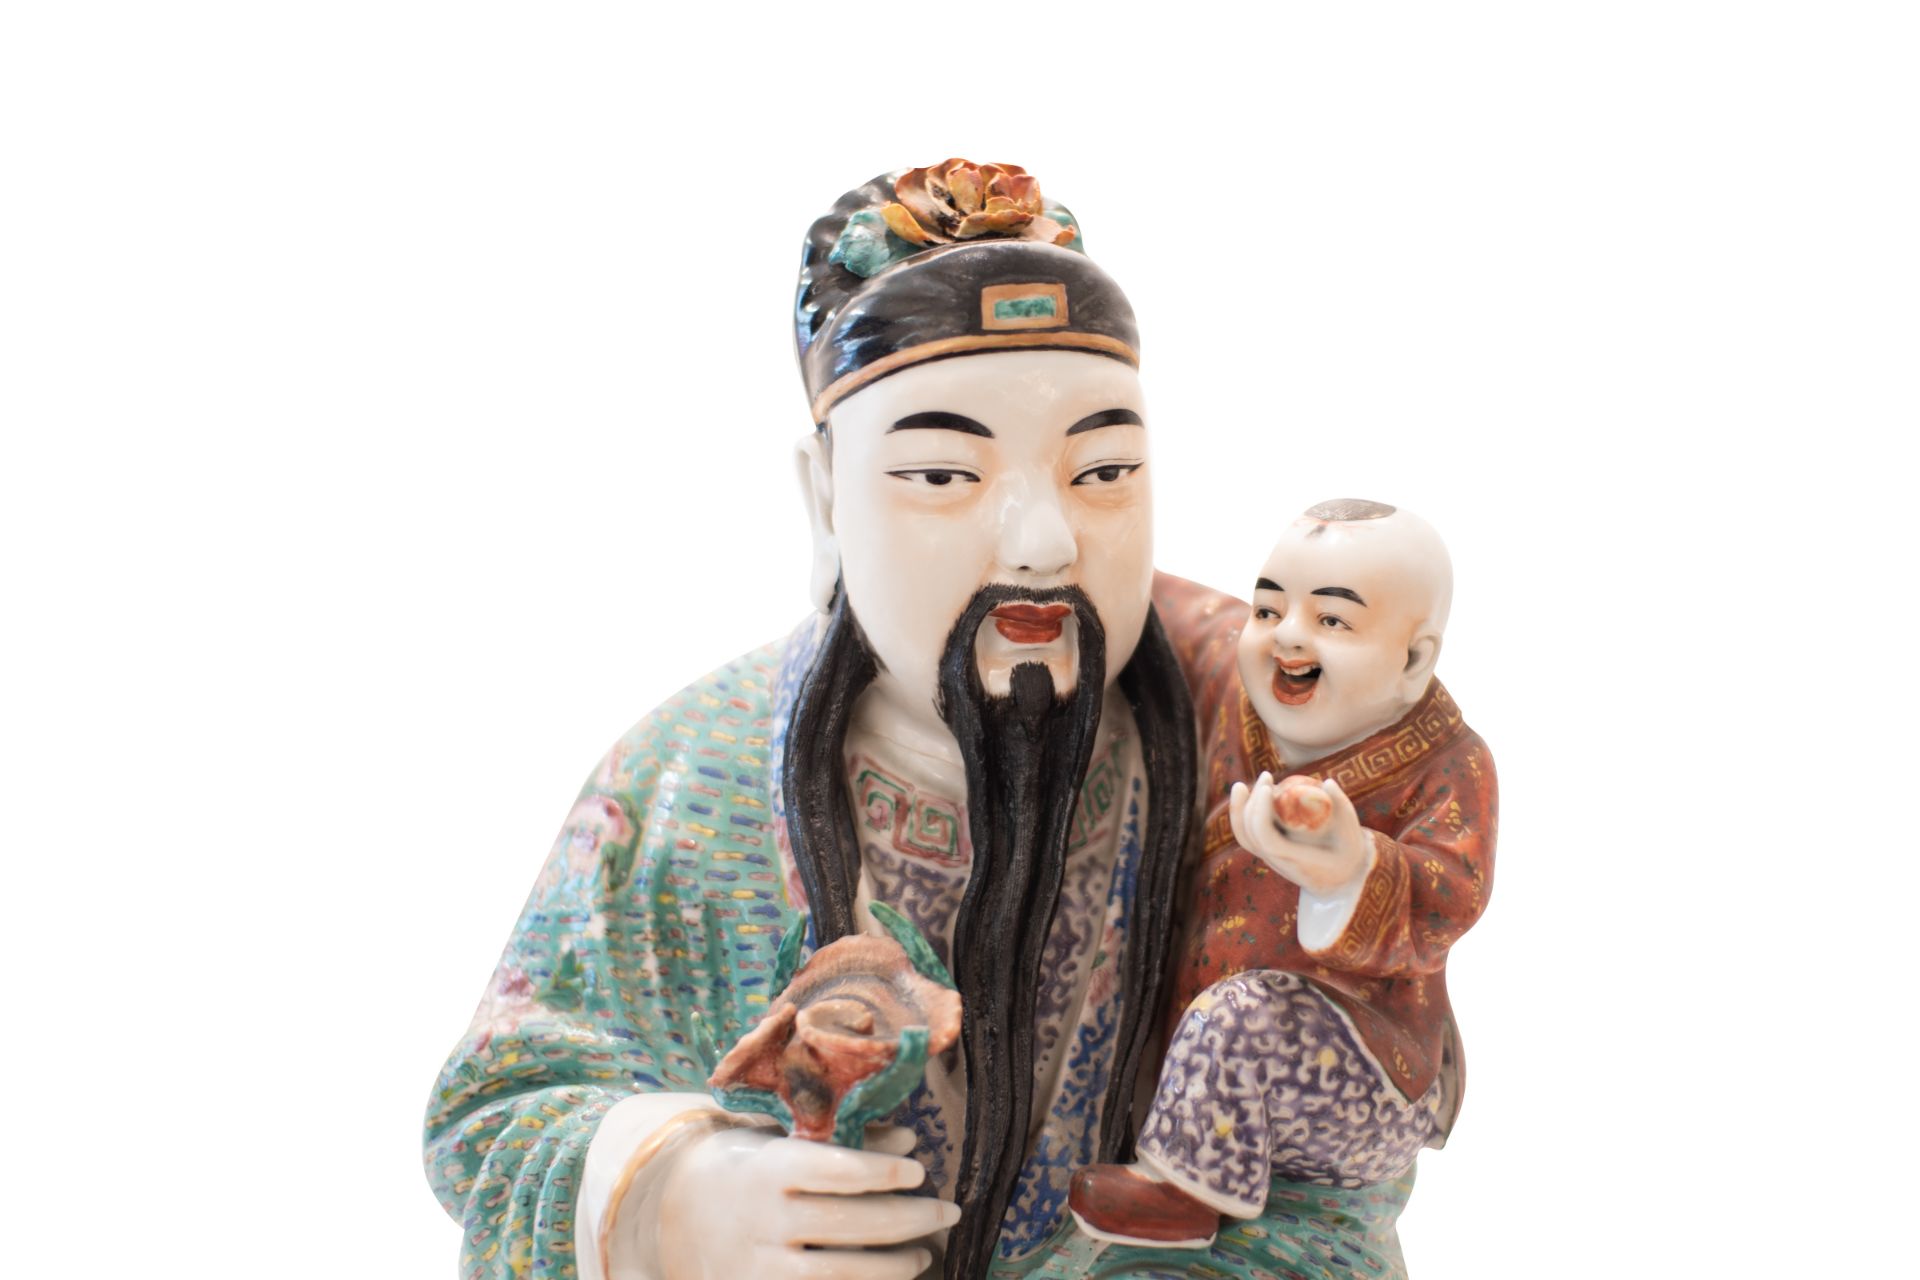 Asian Priest with Child | Asiatischer Priester mit Kind - Image 2 of 9